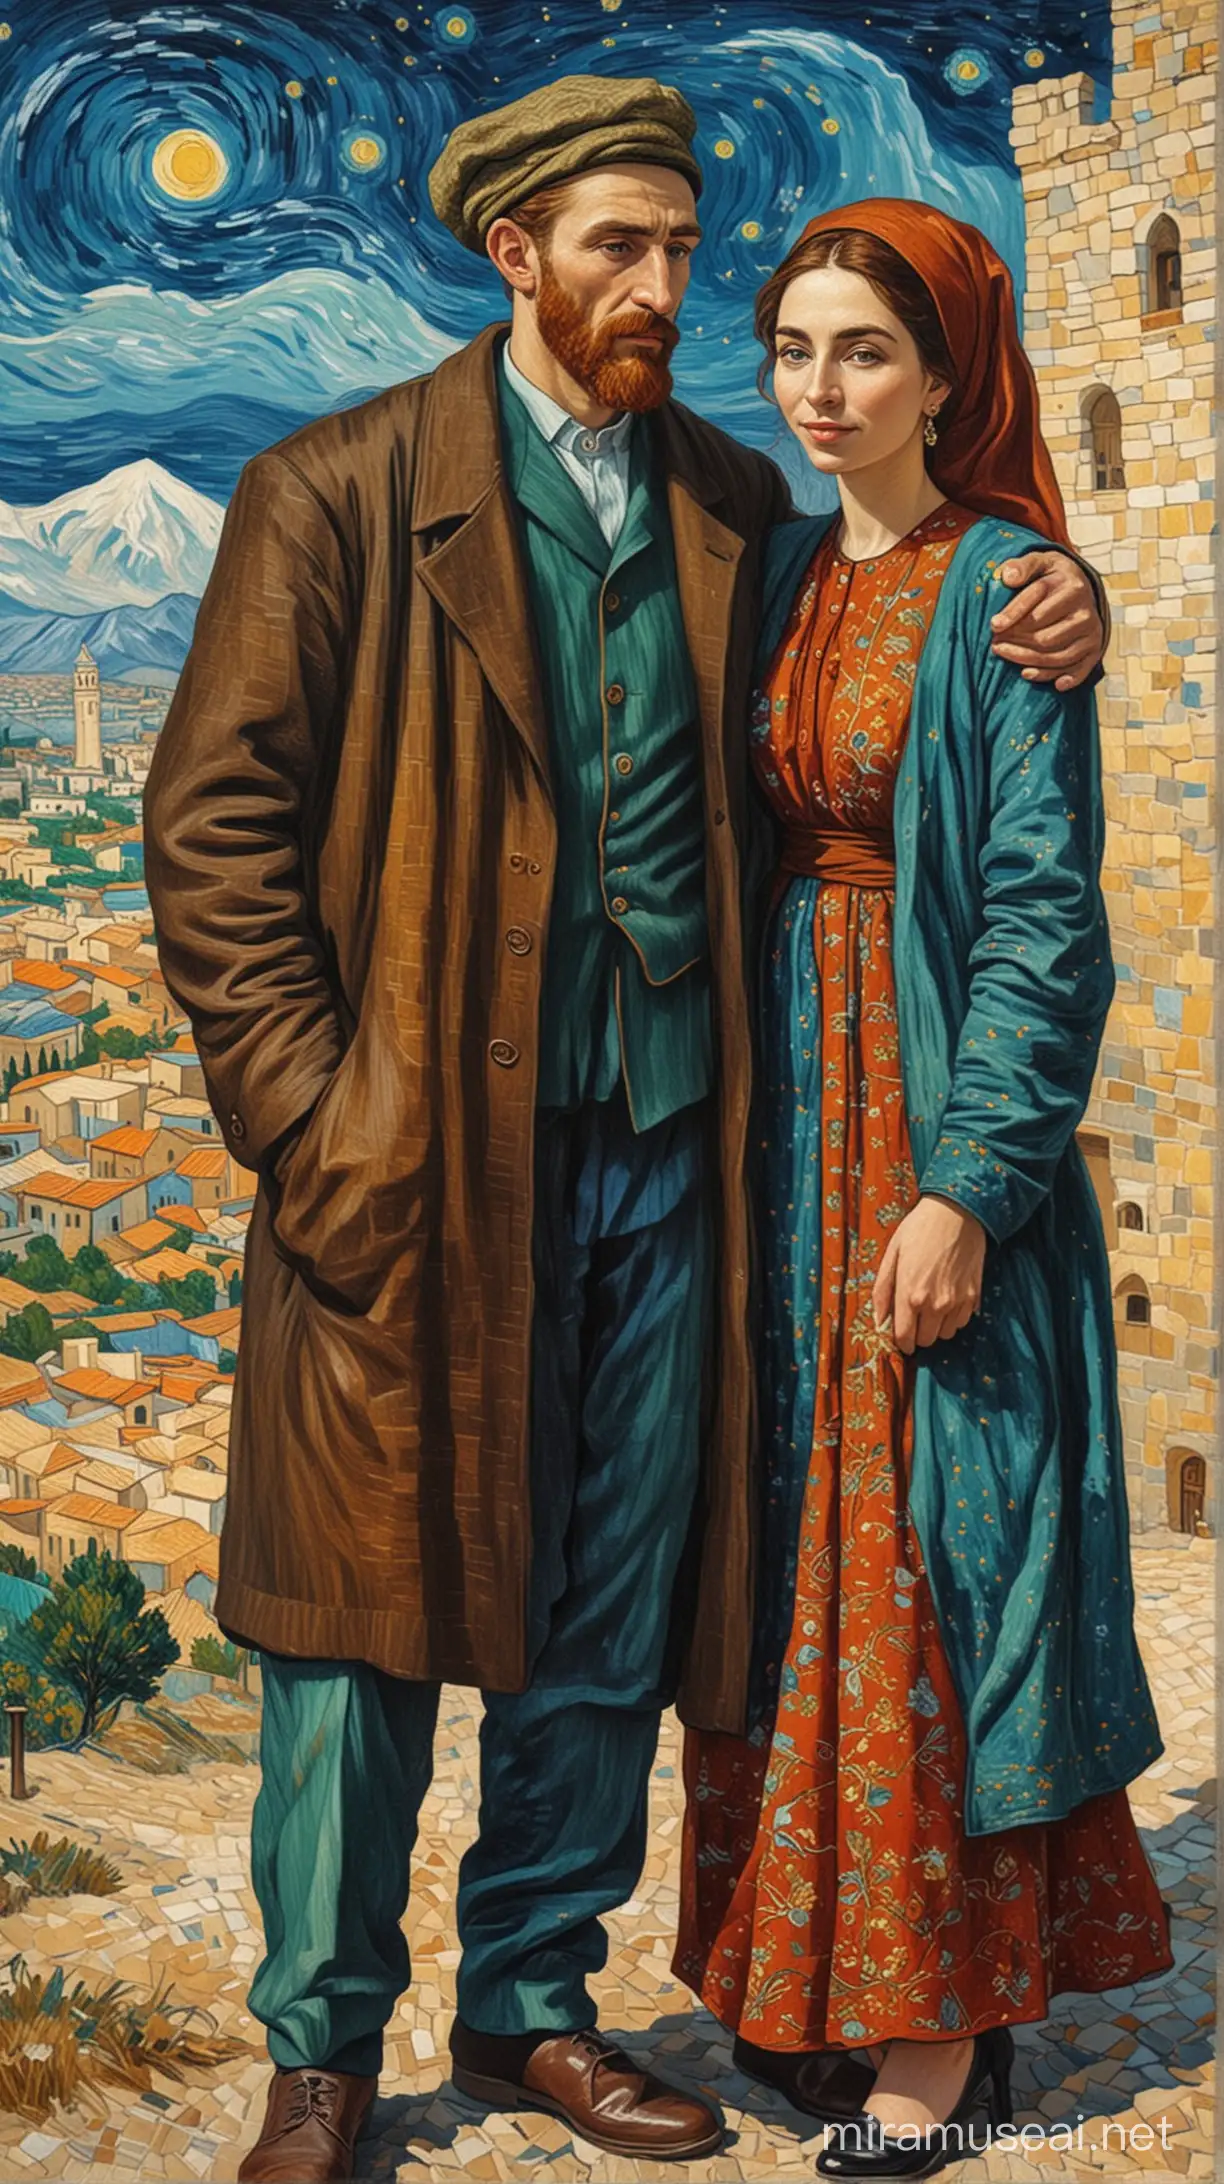 Azerbaijan Couple Embracing in Van Gogh Style Painting